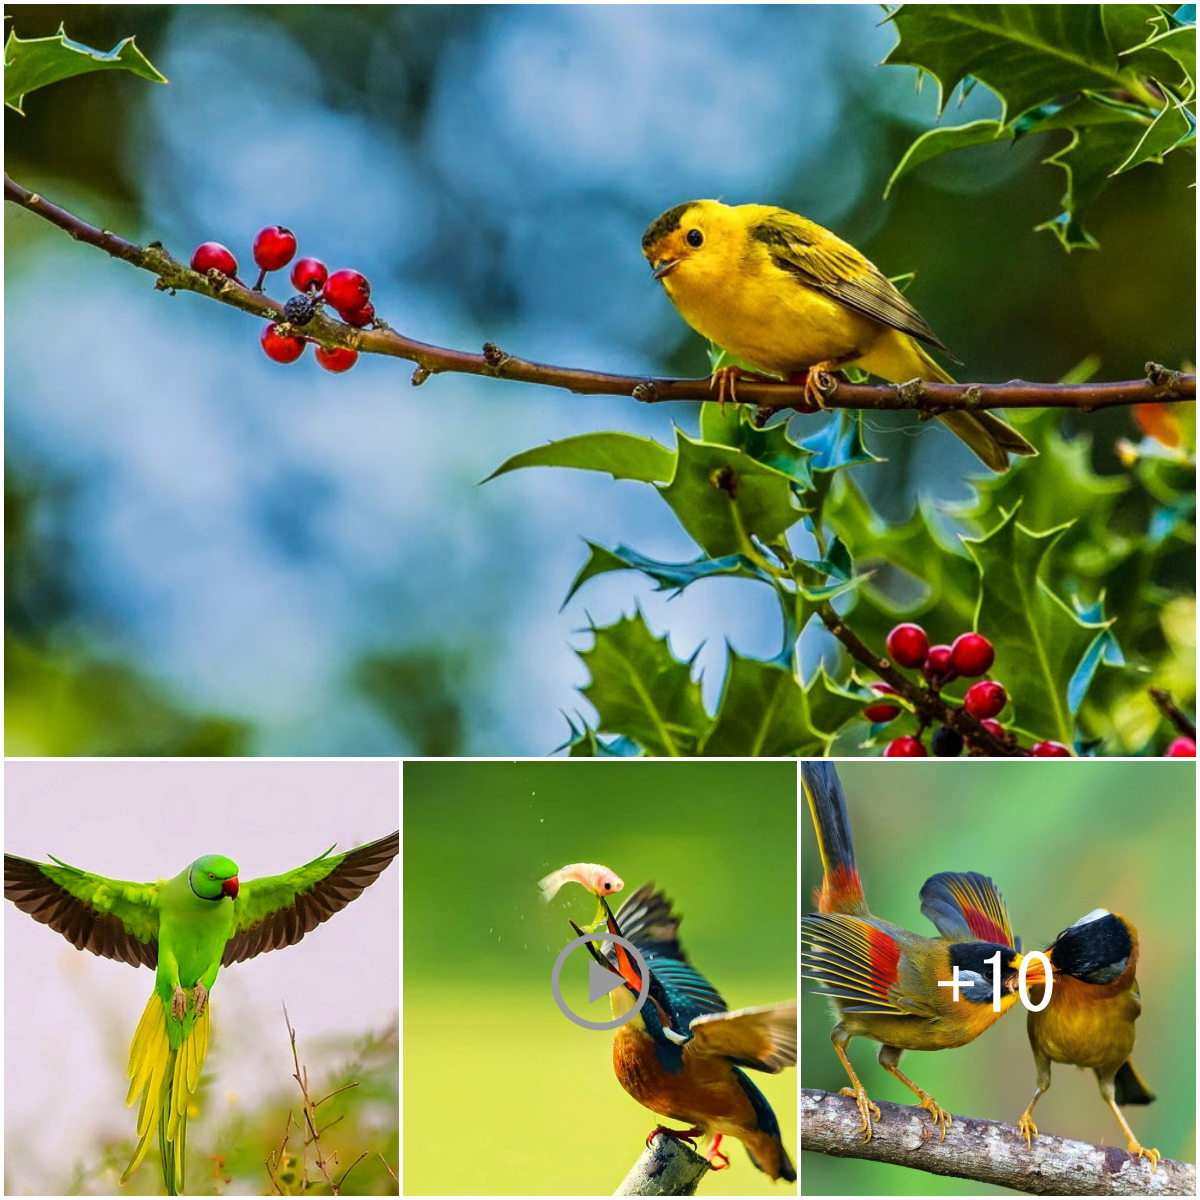 Captivating Avian Beauty: Stunning Images of Exquisite Birds